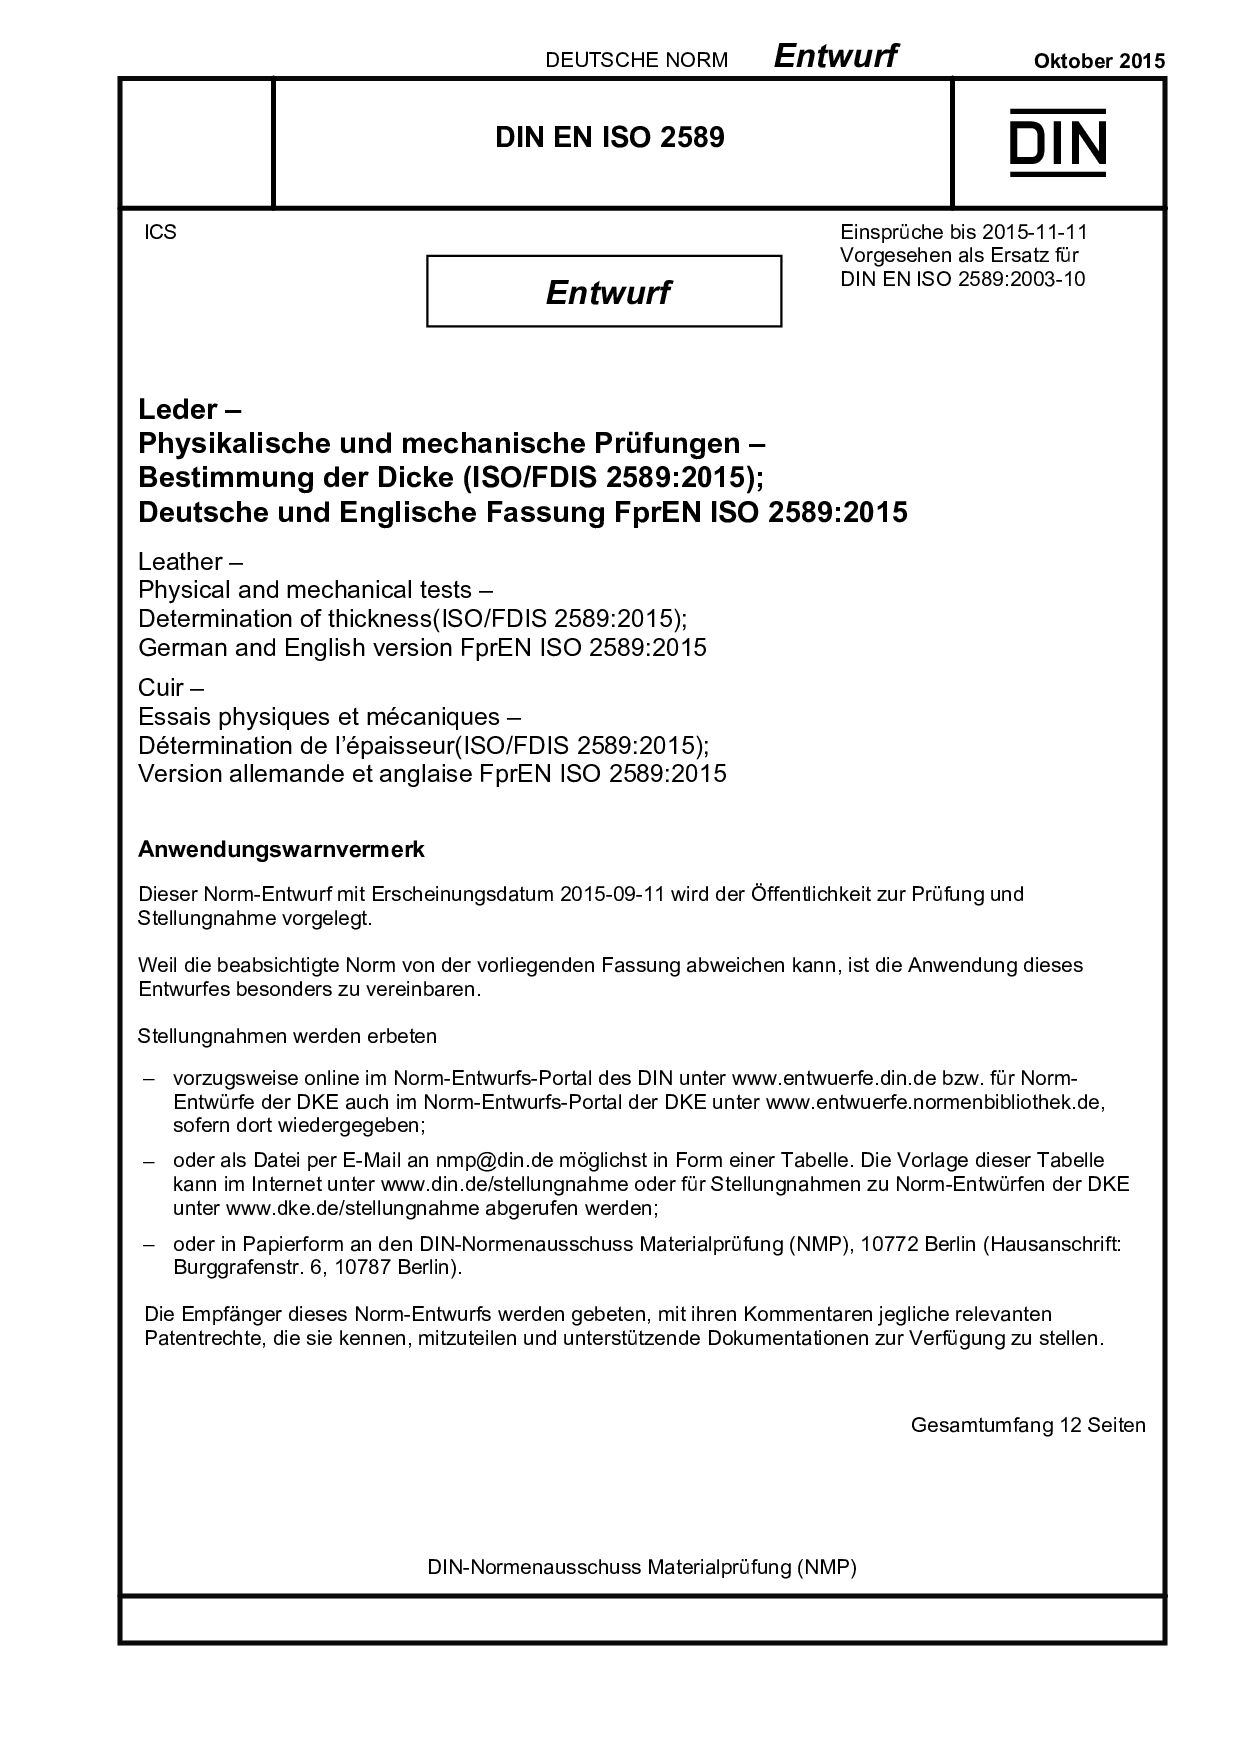 DIN EN ISO 2589 E:2015-10